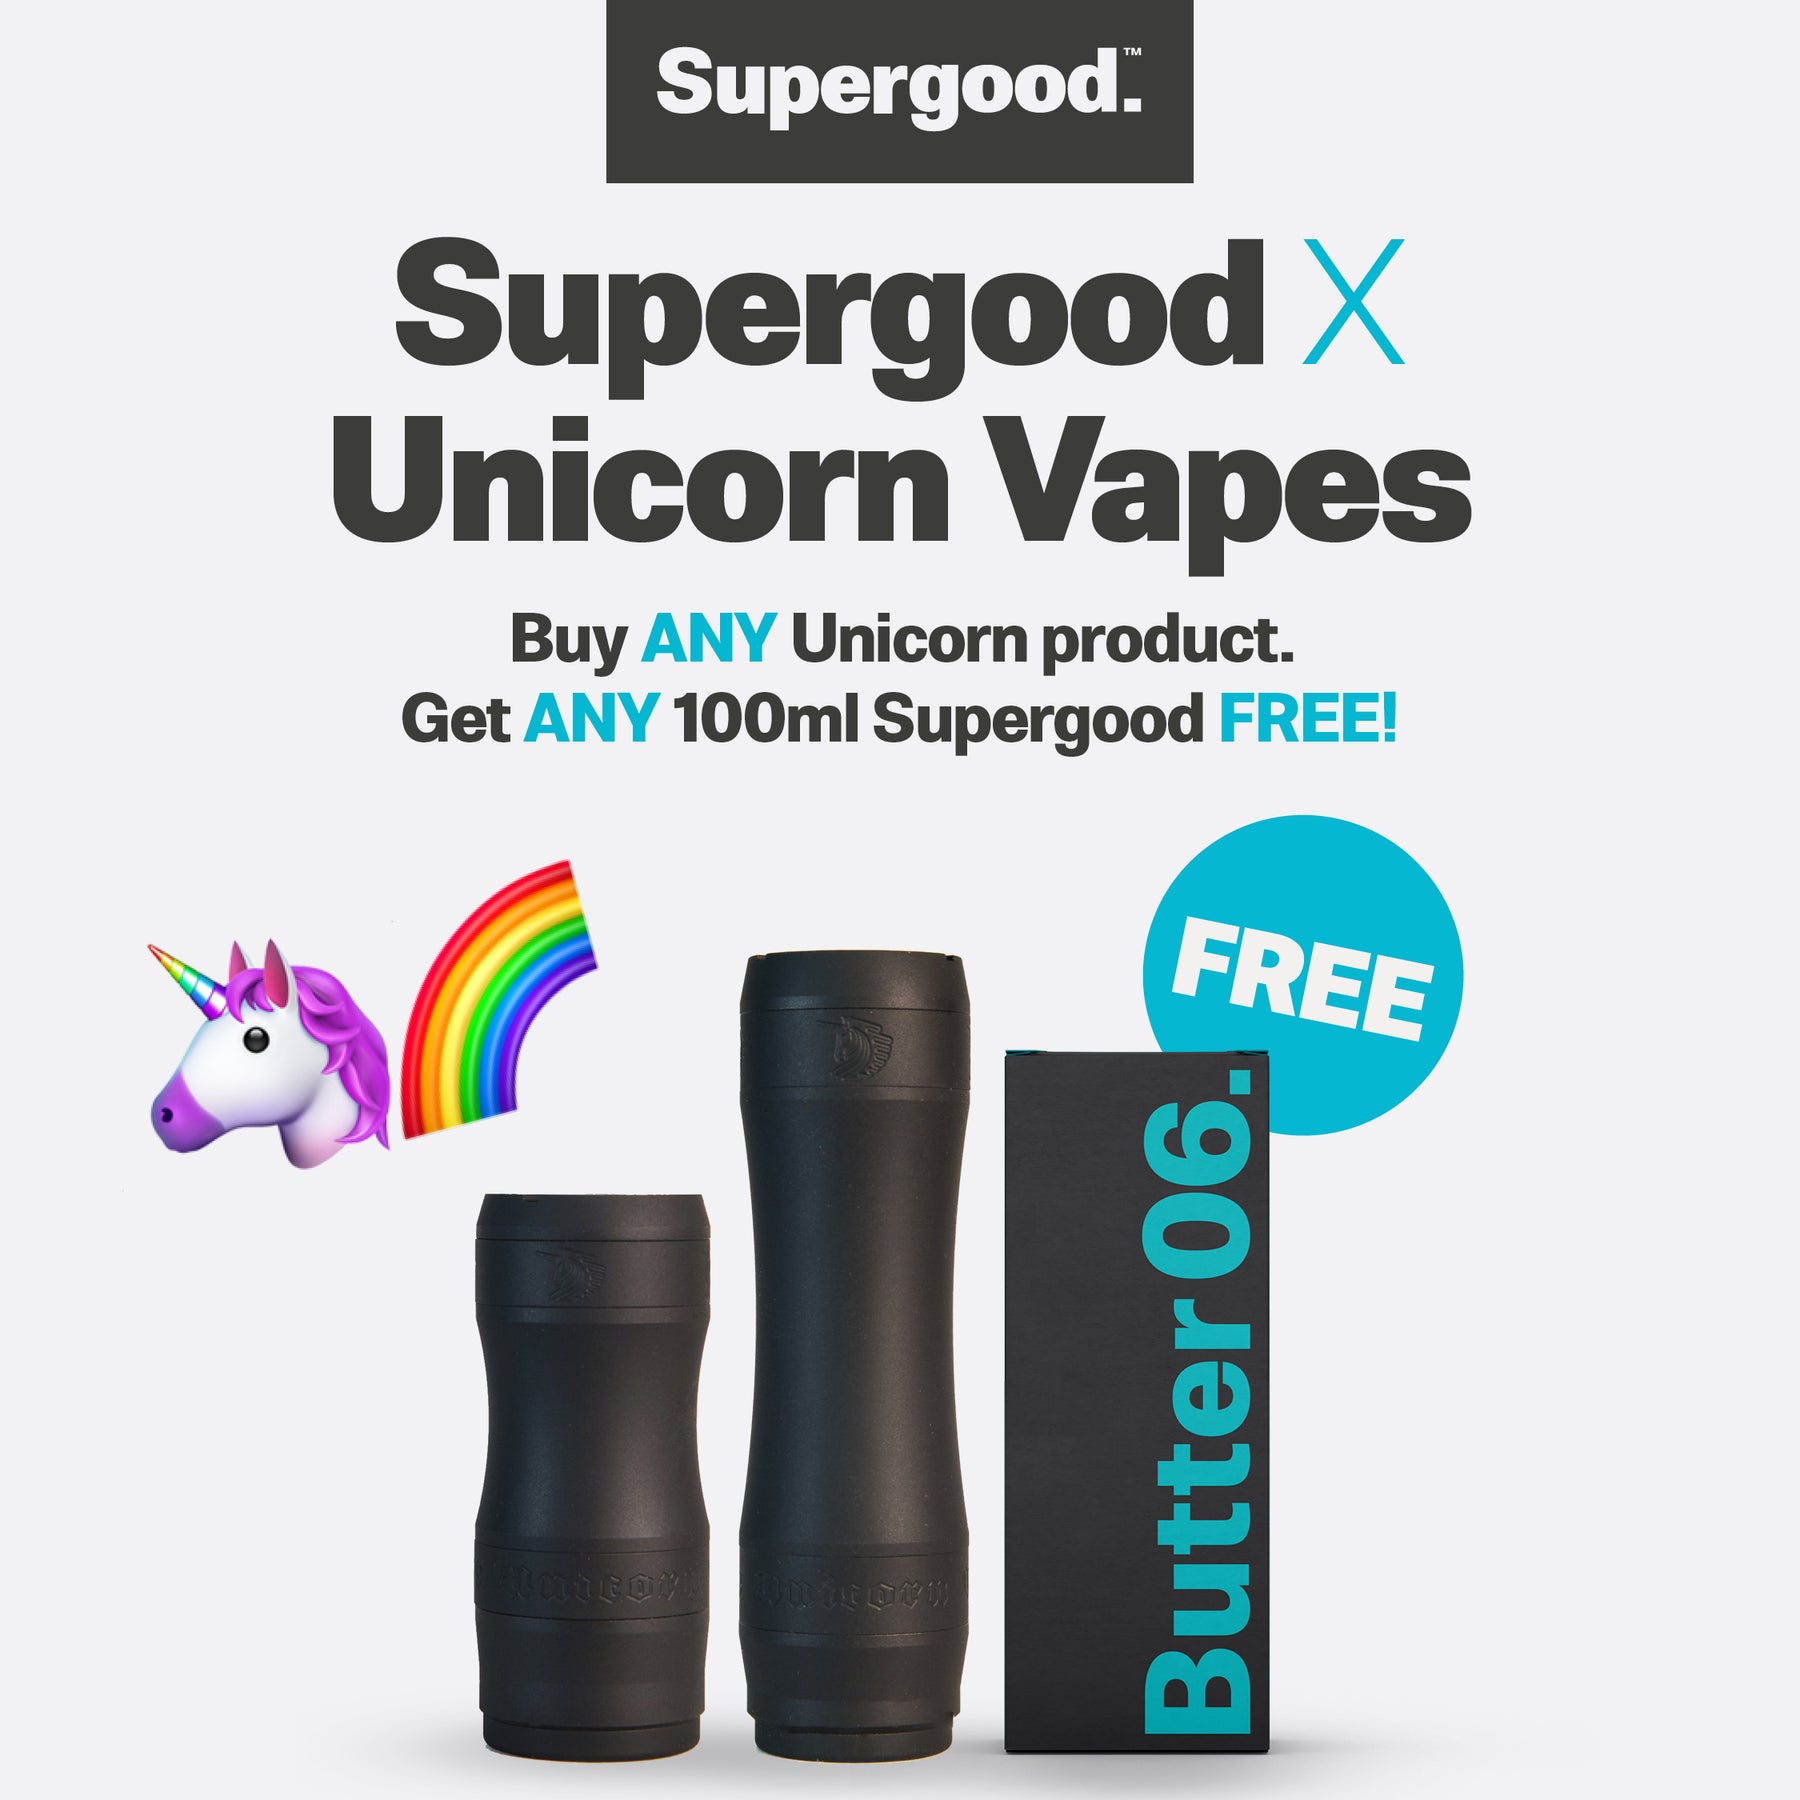 Supergood x Unicorn Vapes Free 100ml